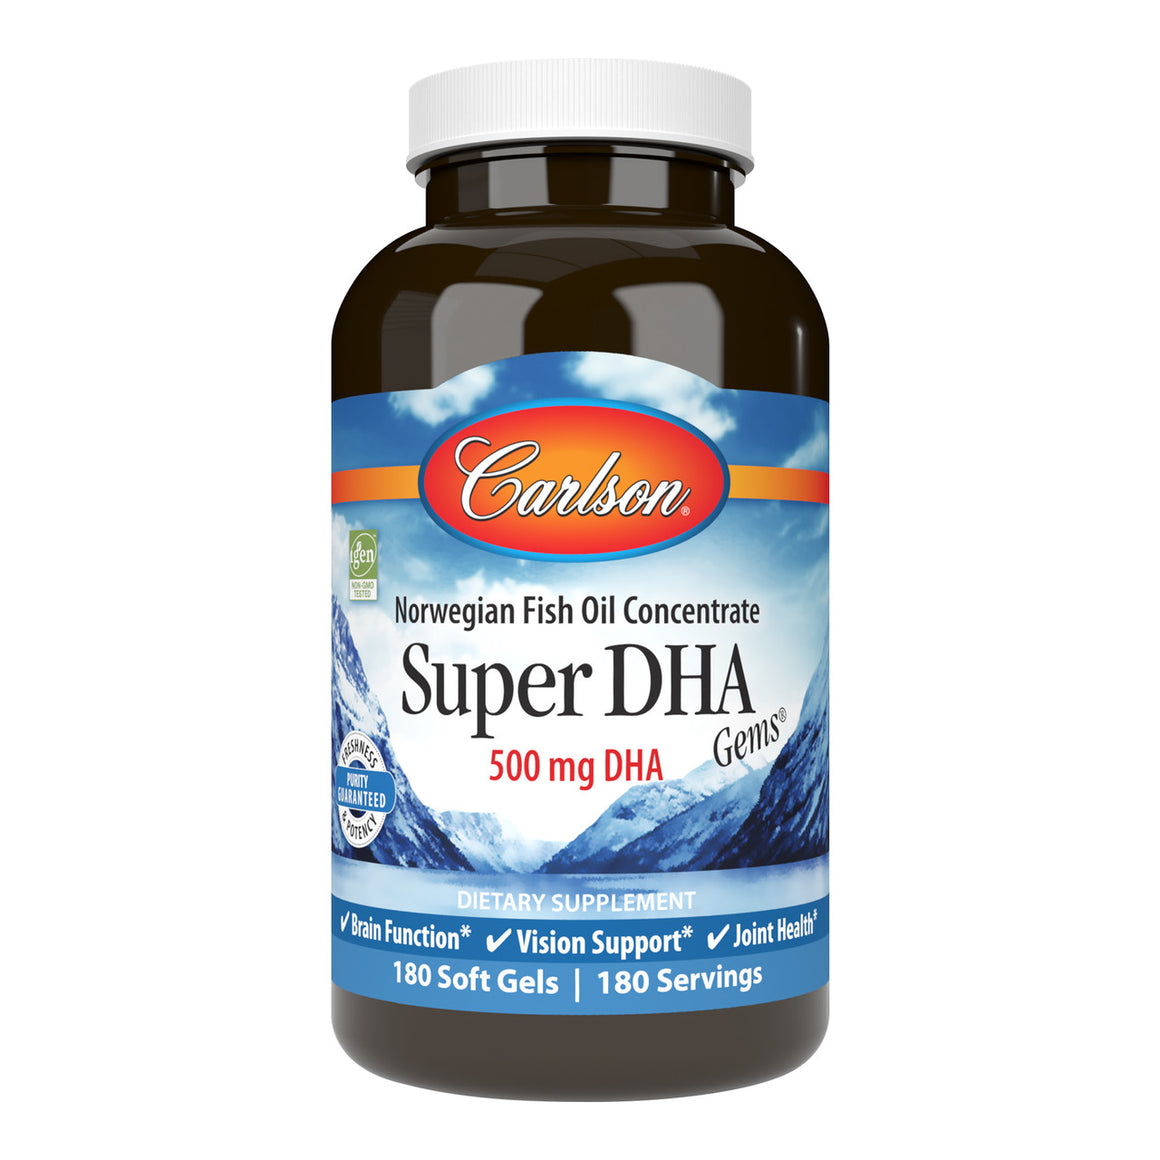 Super DHA Gems 500 mg - Carlson - 180 softgelsSuper DHA Gems 500 mg - Carlson - 180 softgels